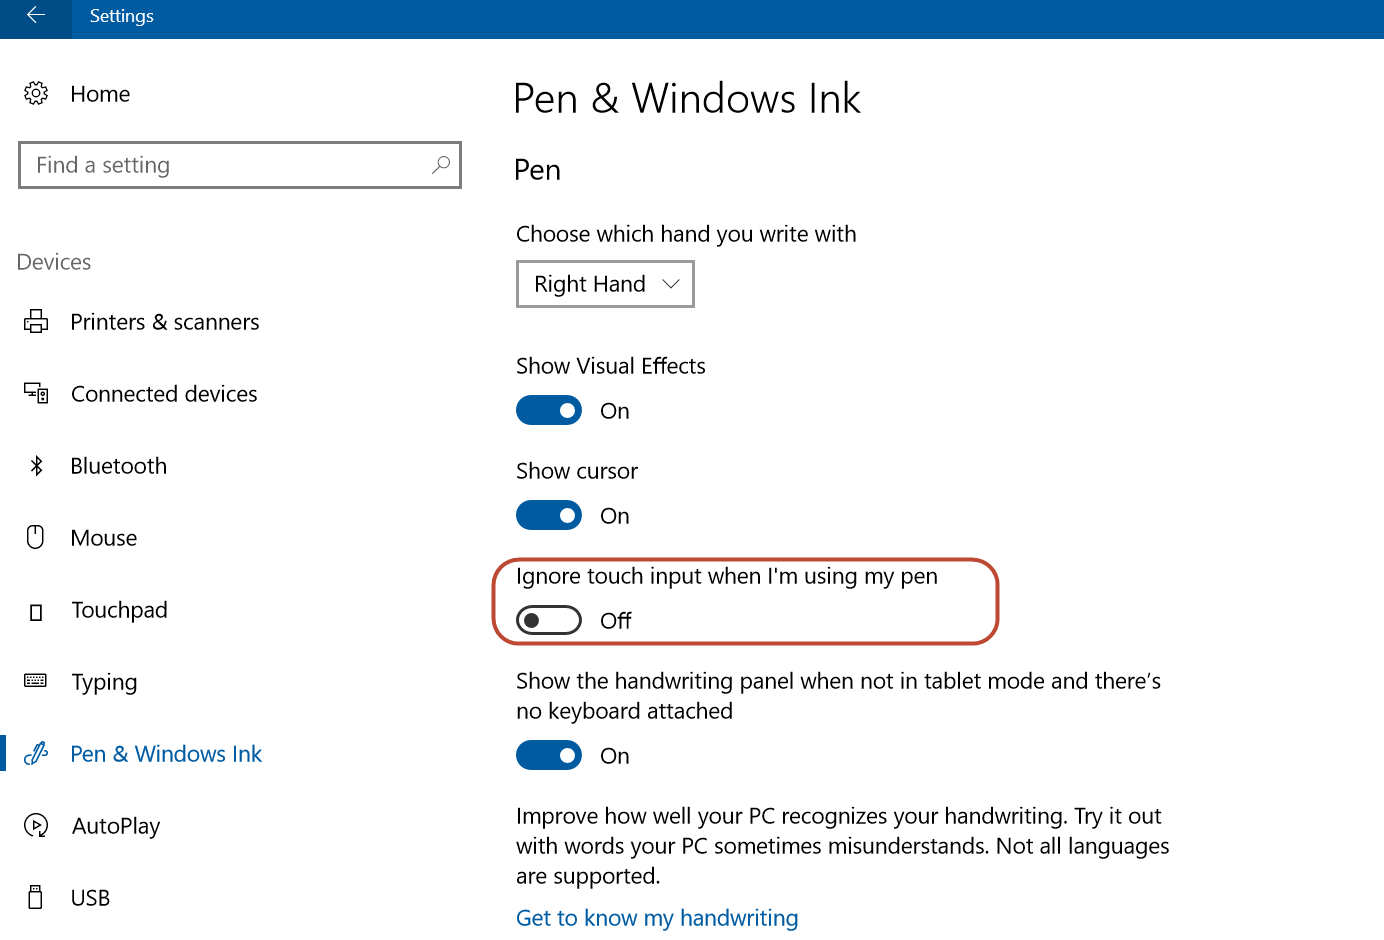 Windows Ink settings